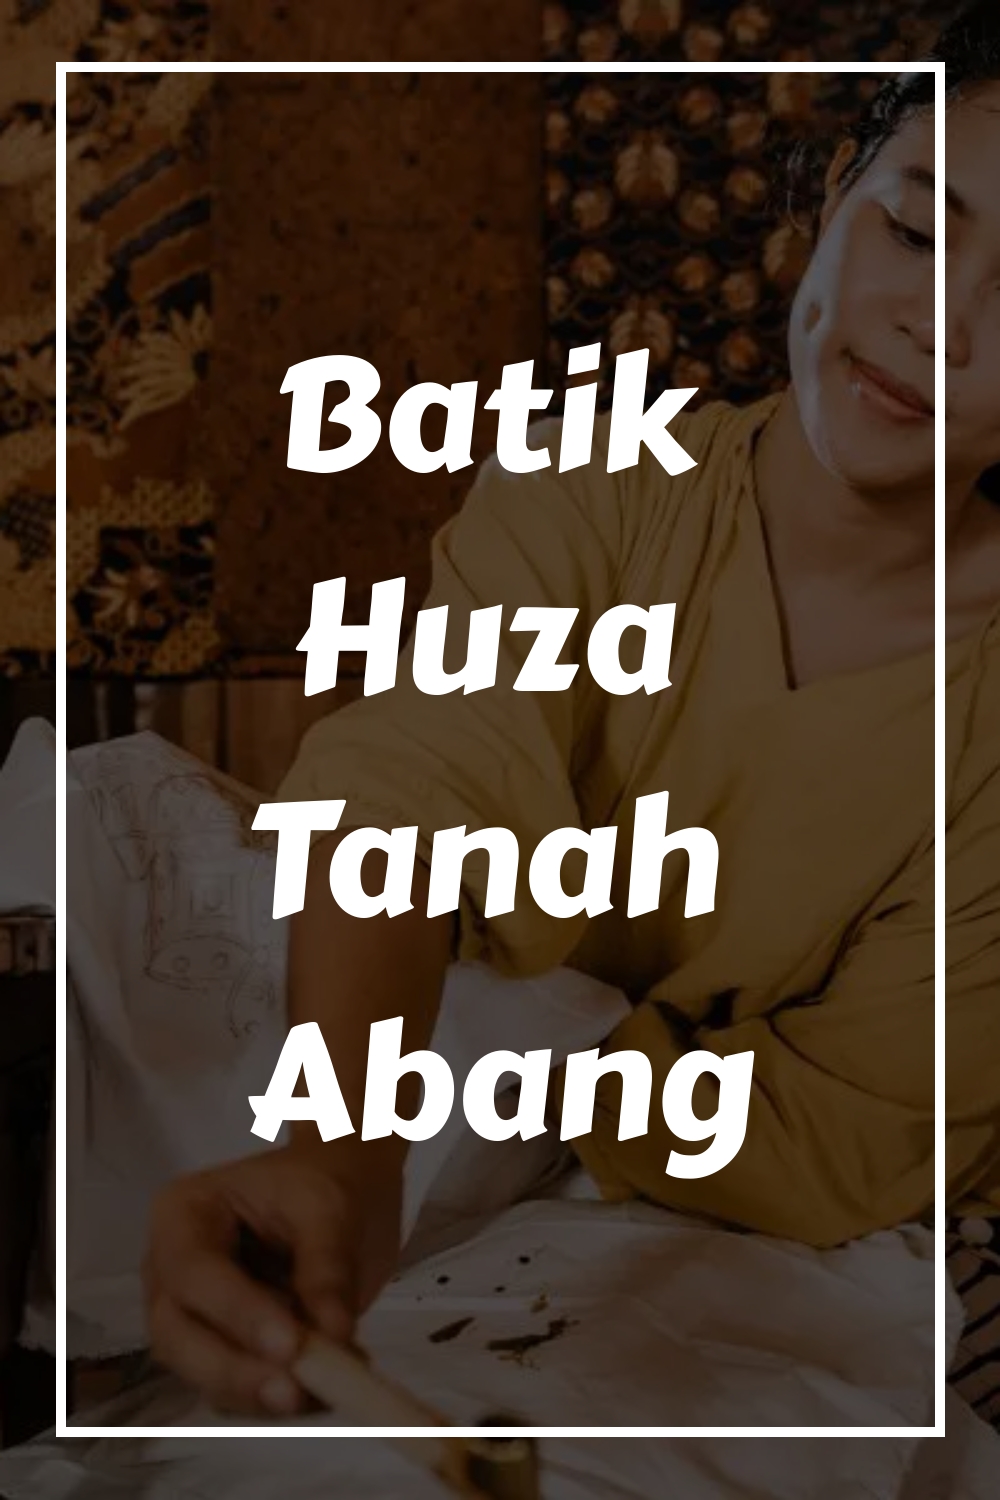 Batik Huza Tanah Abang generated pin 1993